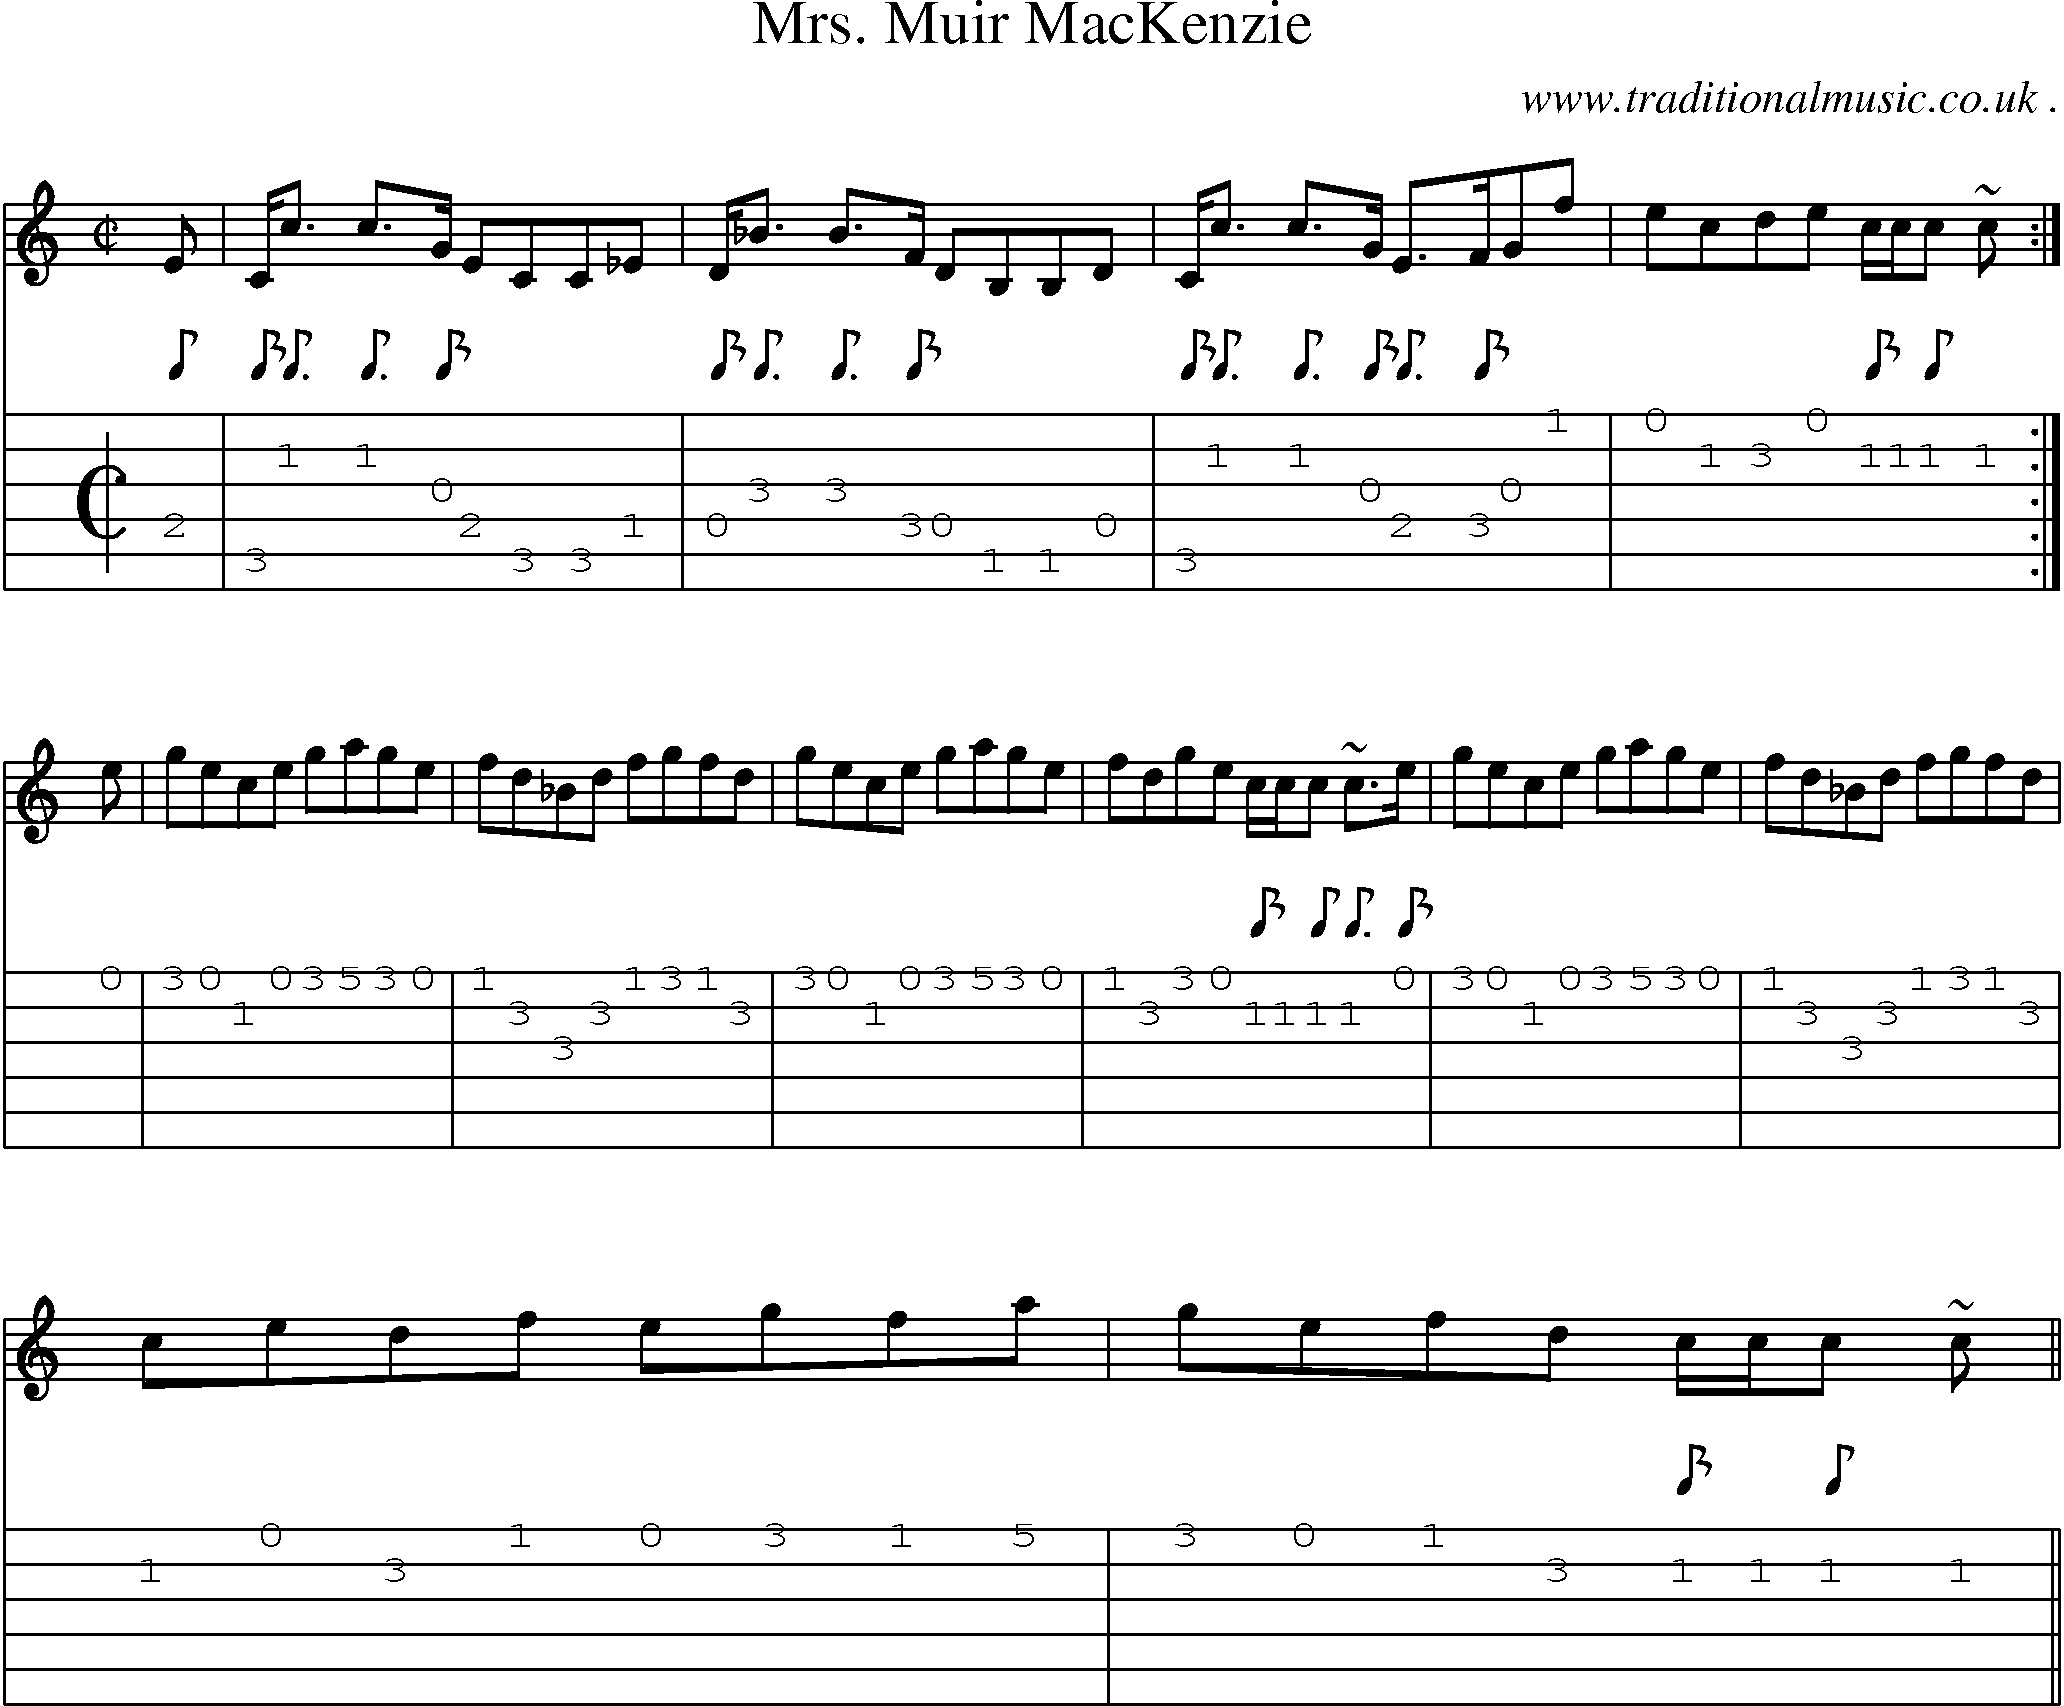 Sheet-music  score, Chords and Guitar Tabs for Mrs Muir Mackenzie